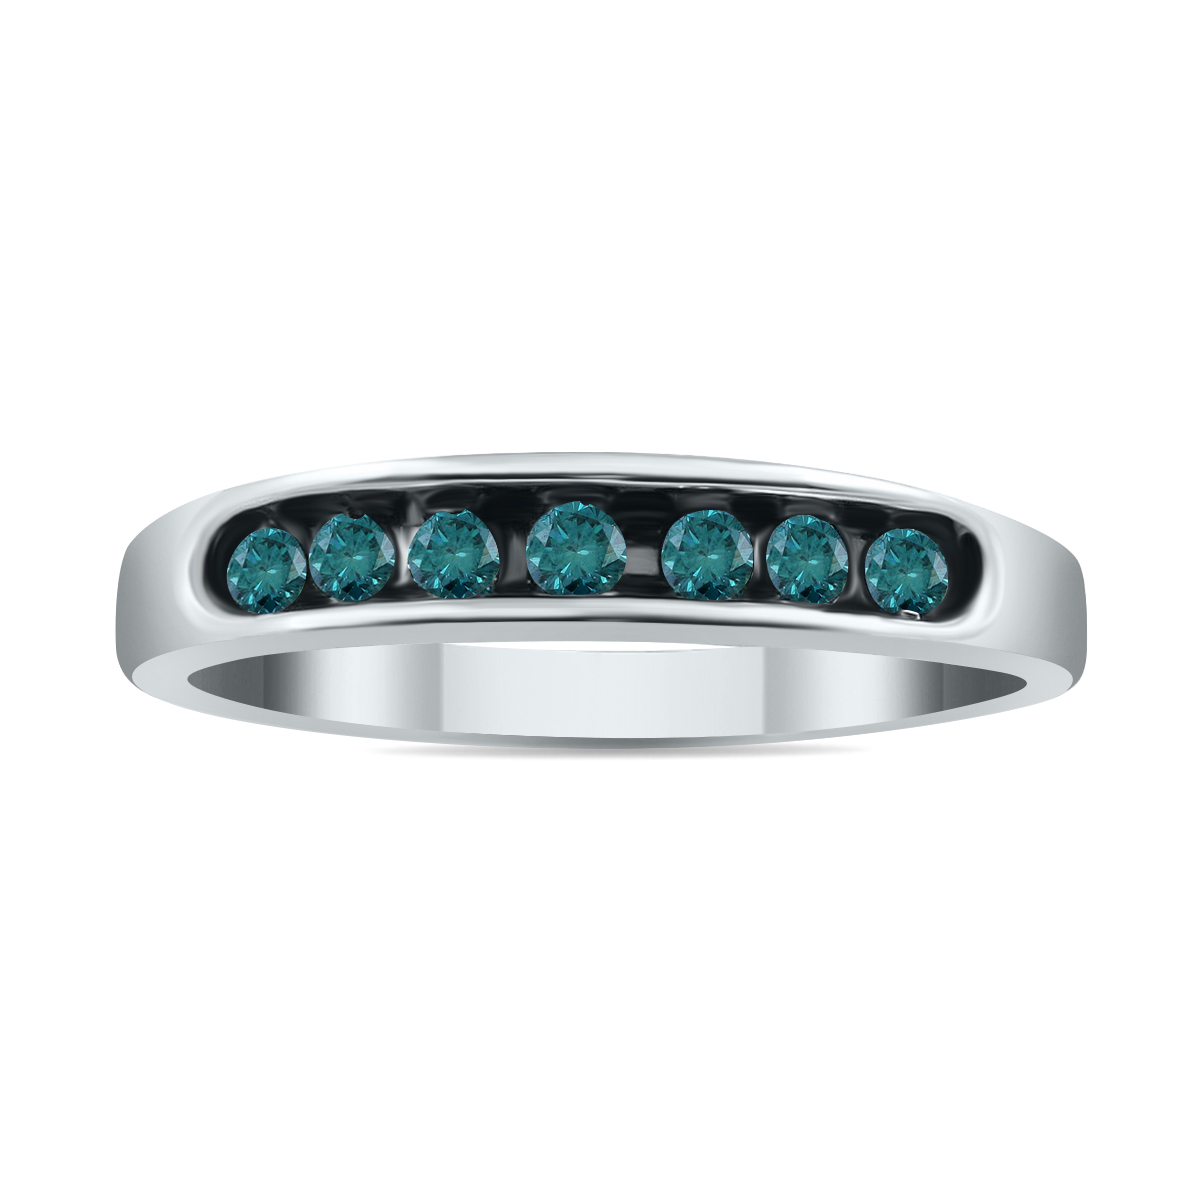 1/4 Carat TW Blue Diamond Ring in 10K White Gold